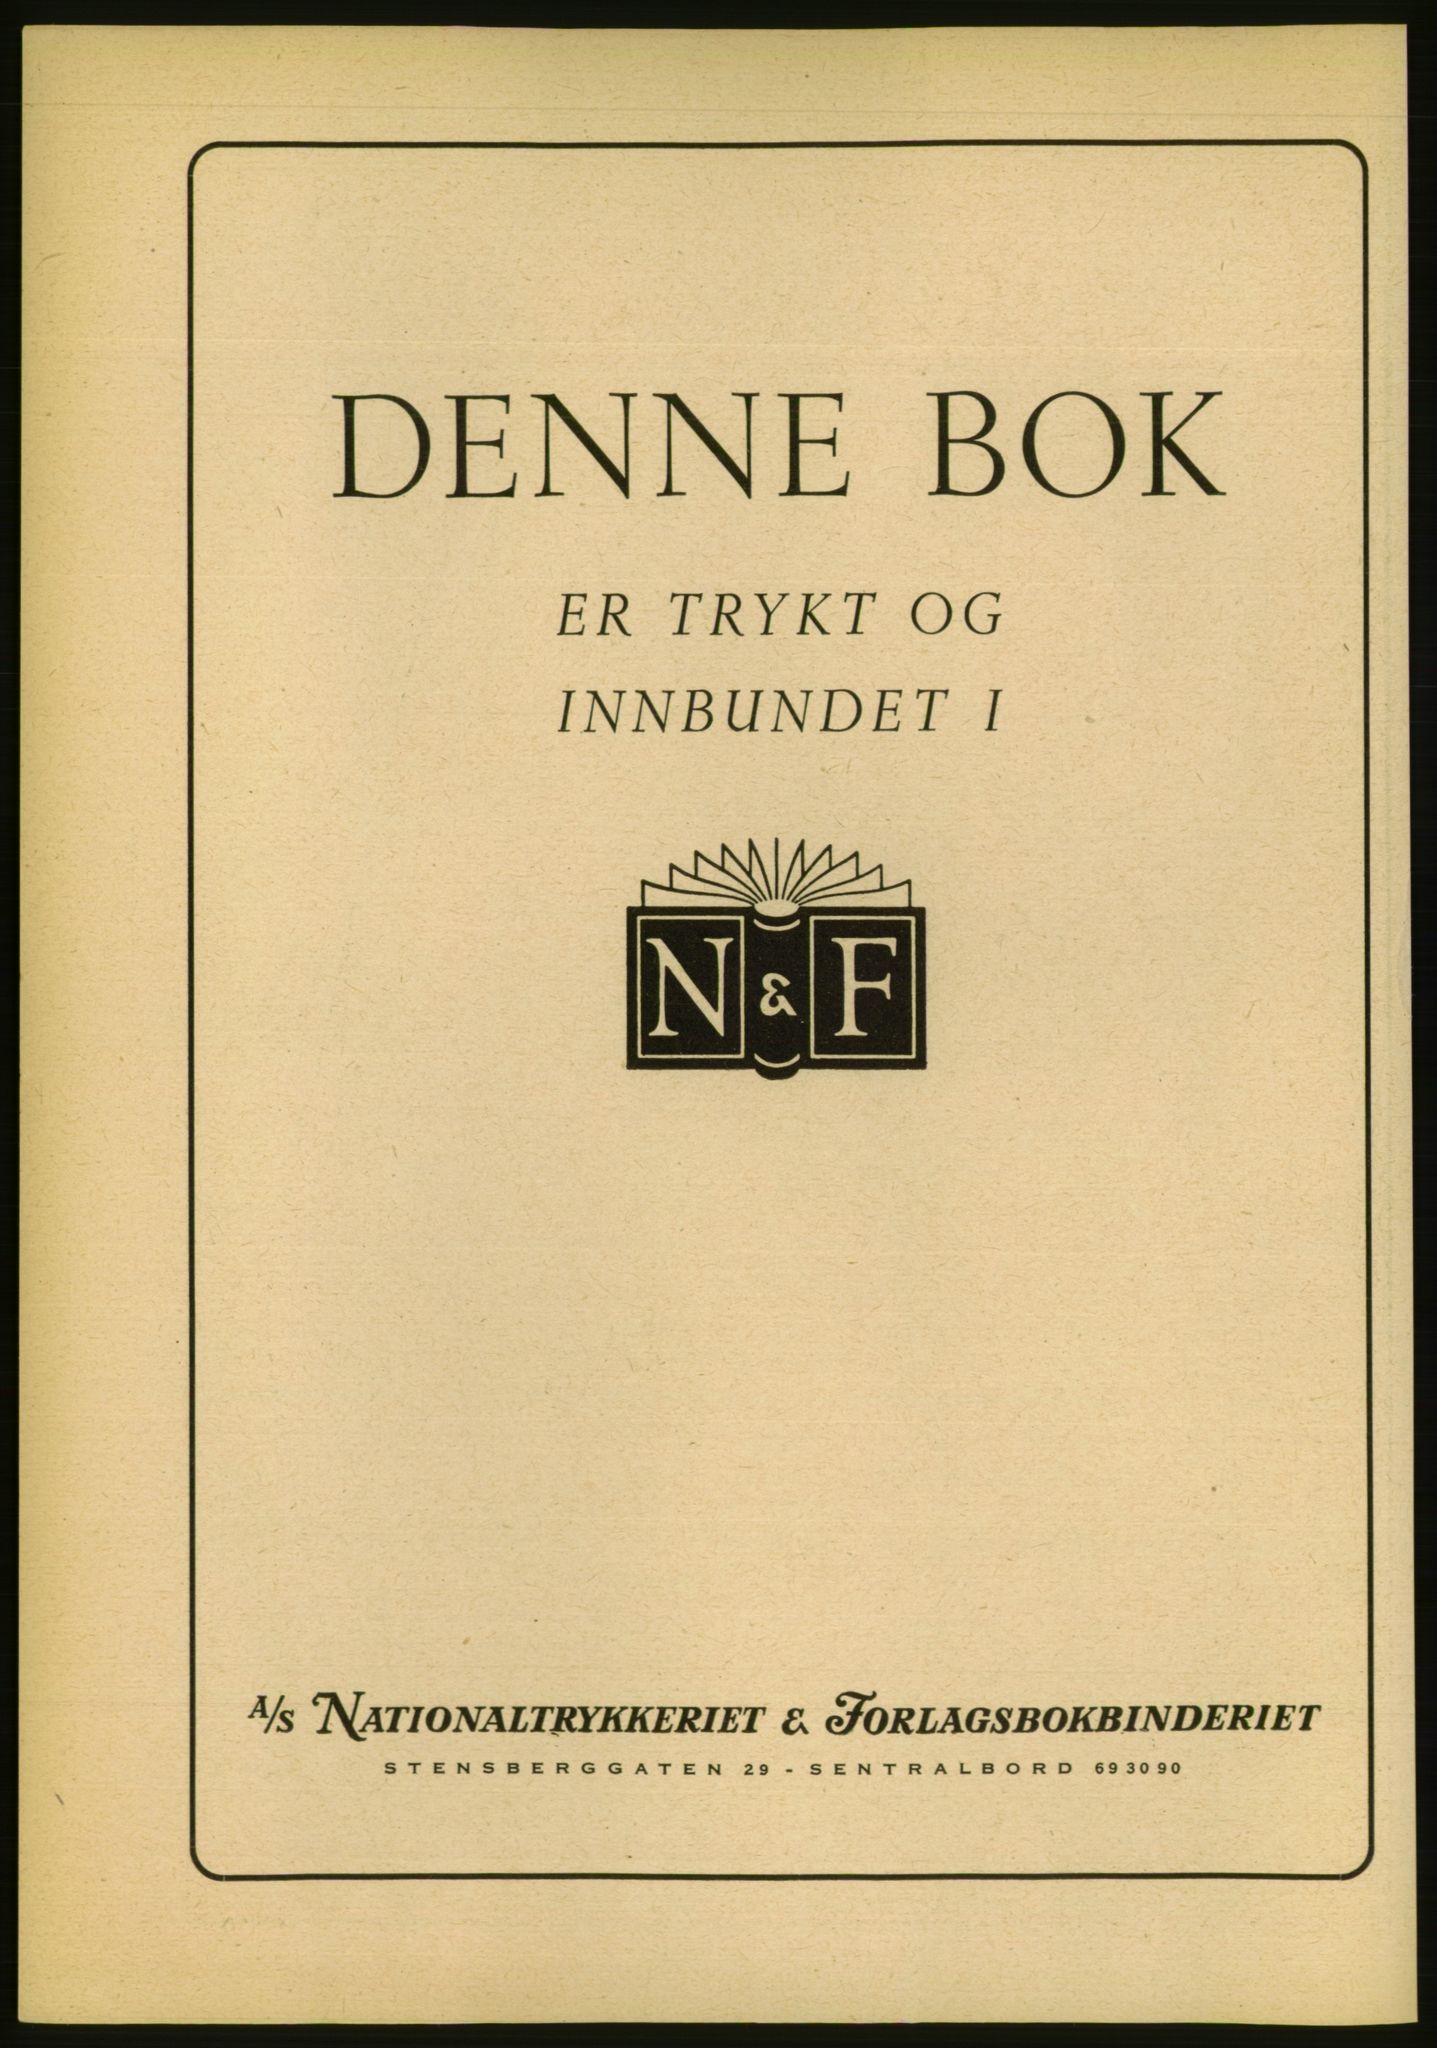 Kristiania/Oslo adressebok, PUBL/-, 1956-1957